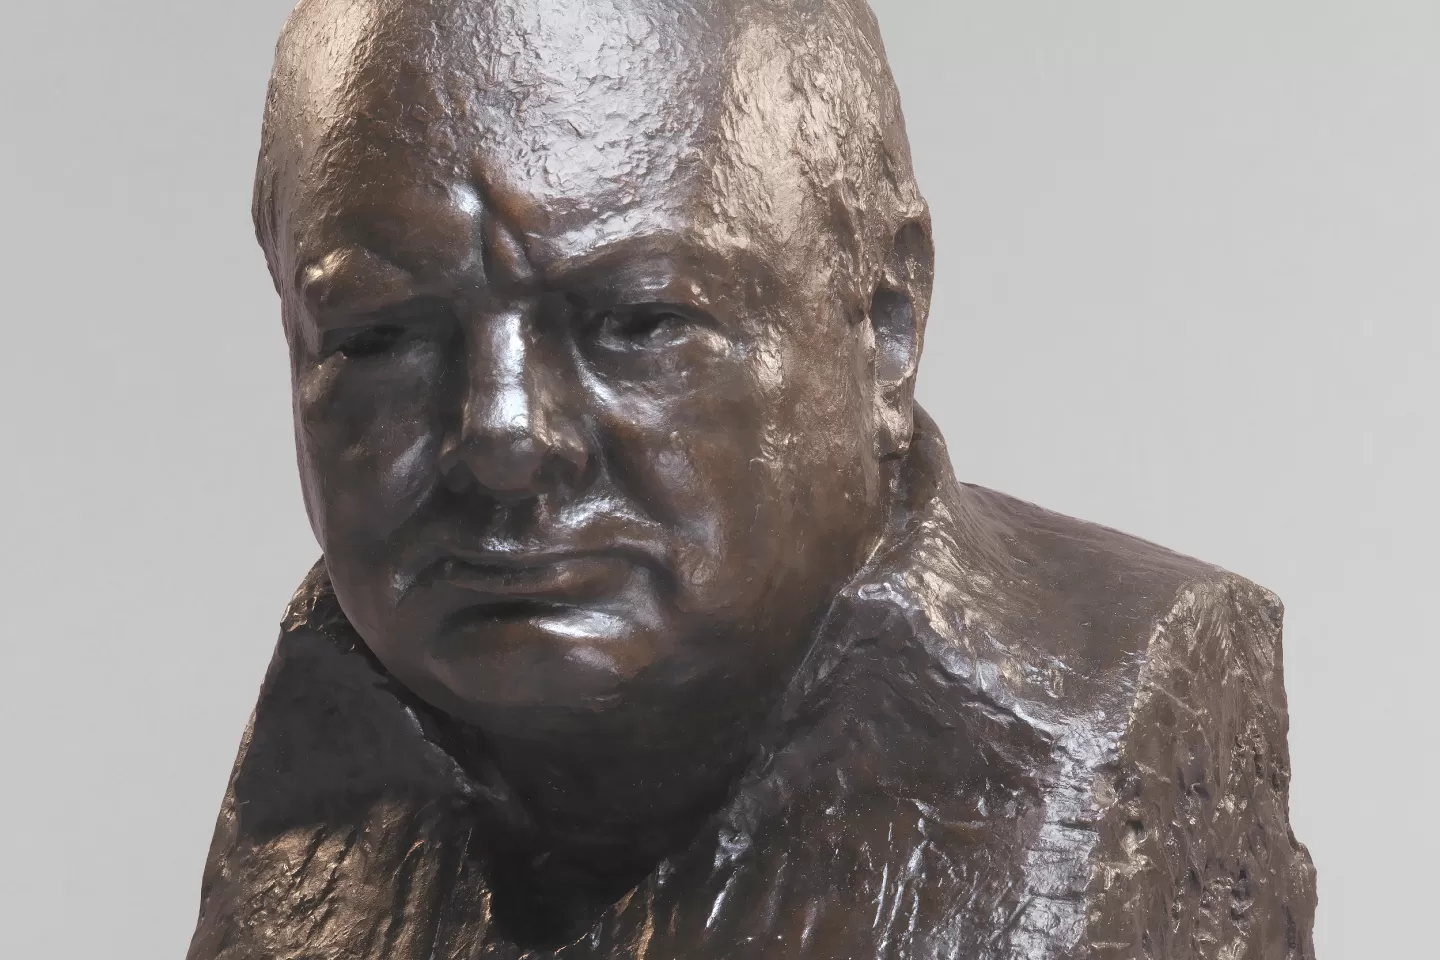 Sir Winston Churchill Bust